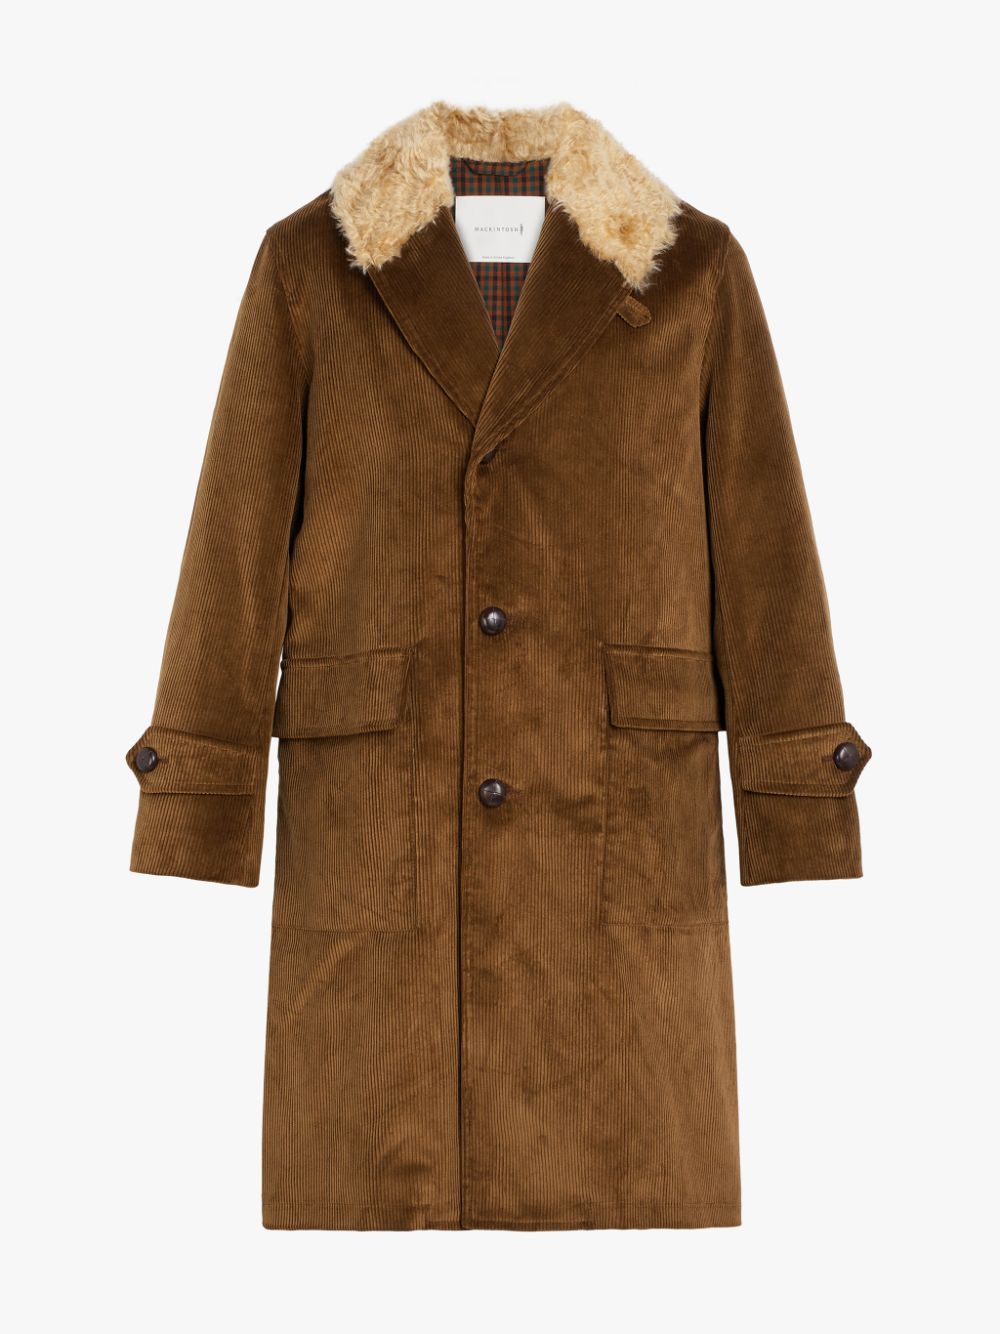 Perth corduroy coat | Mackintosh